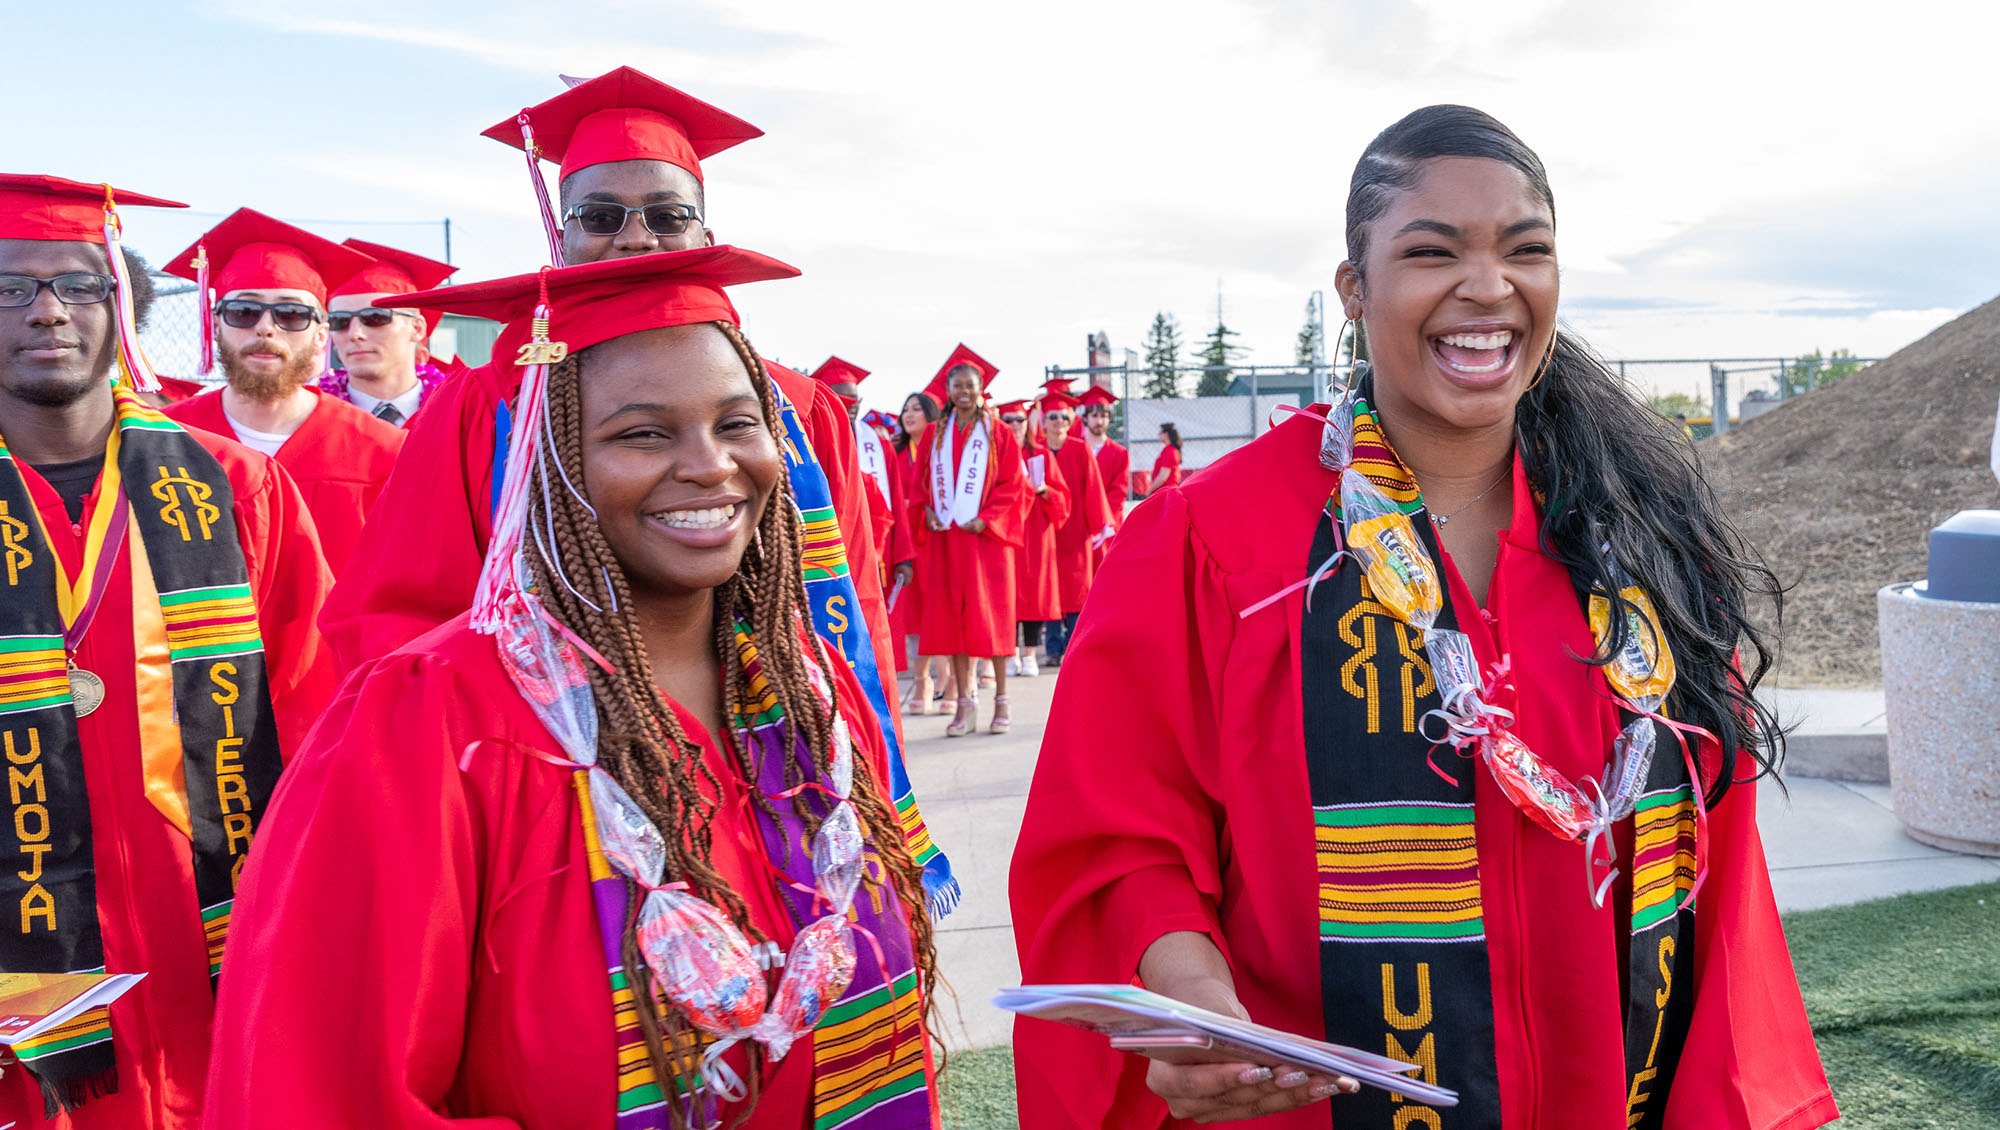 Four smiling Sierra College graduates dressed in graduation attire and Umoja stoles